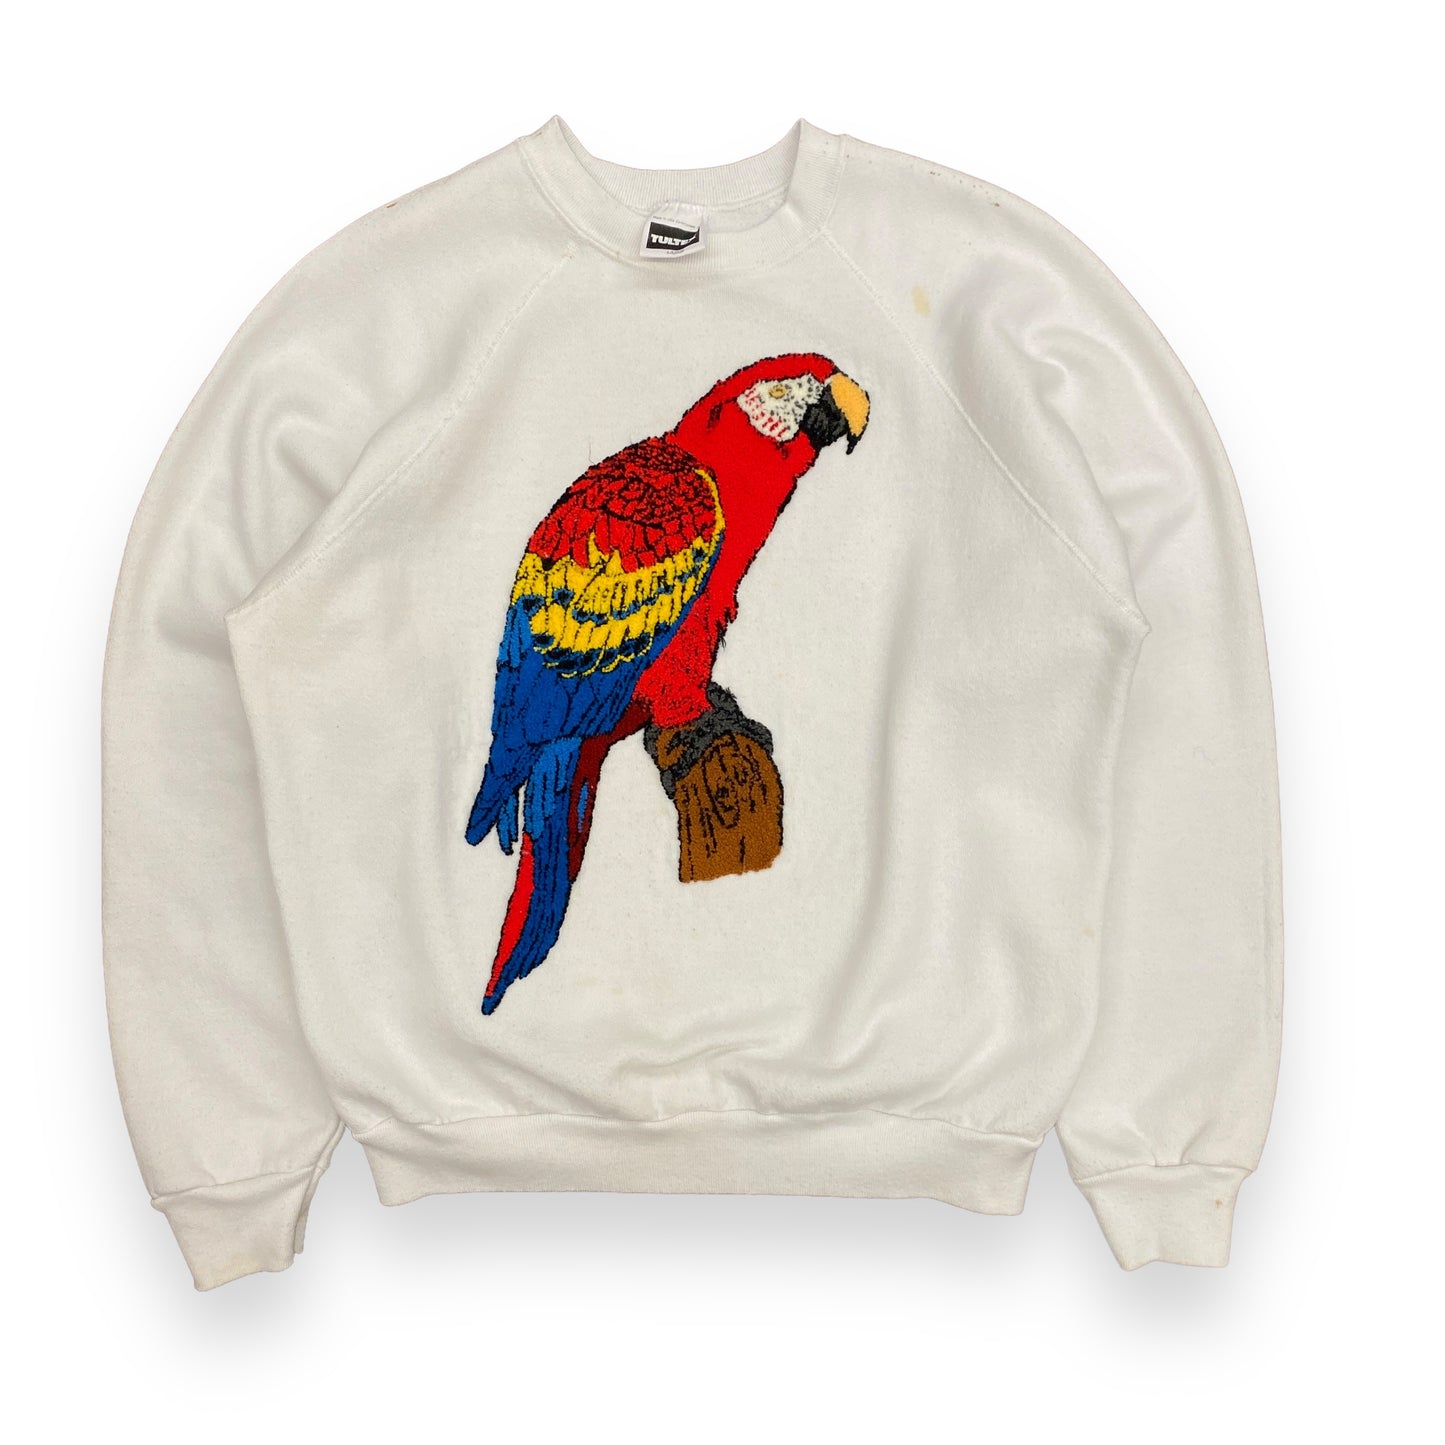 Vintage 1980s Chain Stitched Parrot Raglan Sweatshirt - Size Large